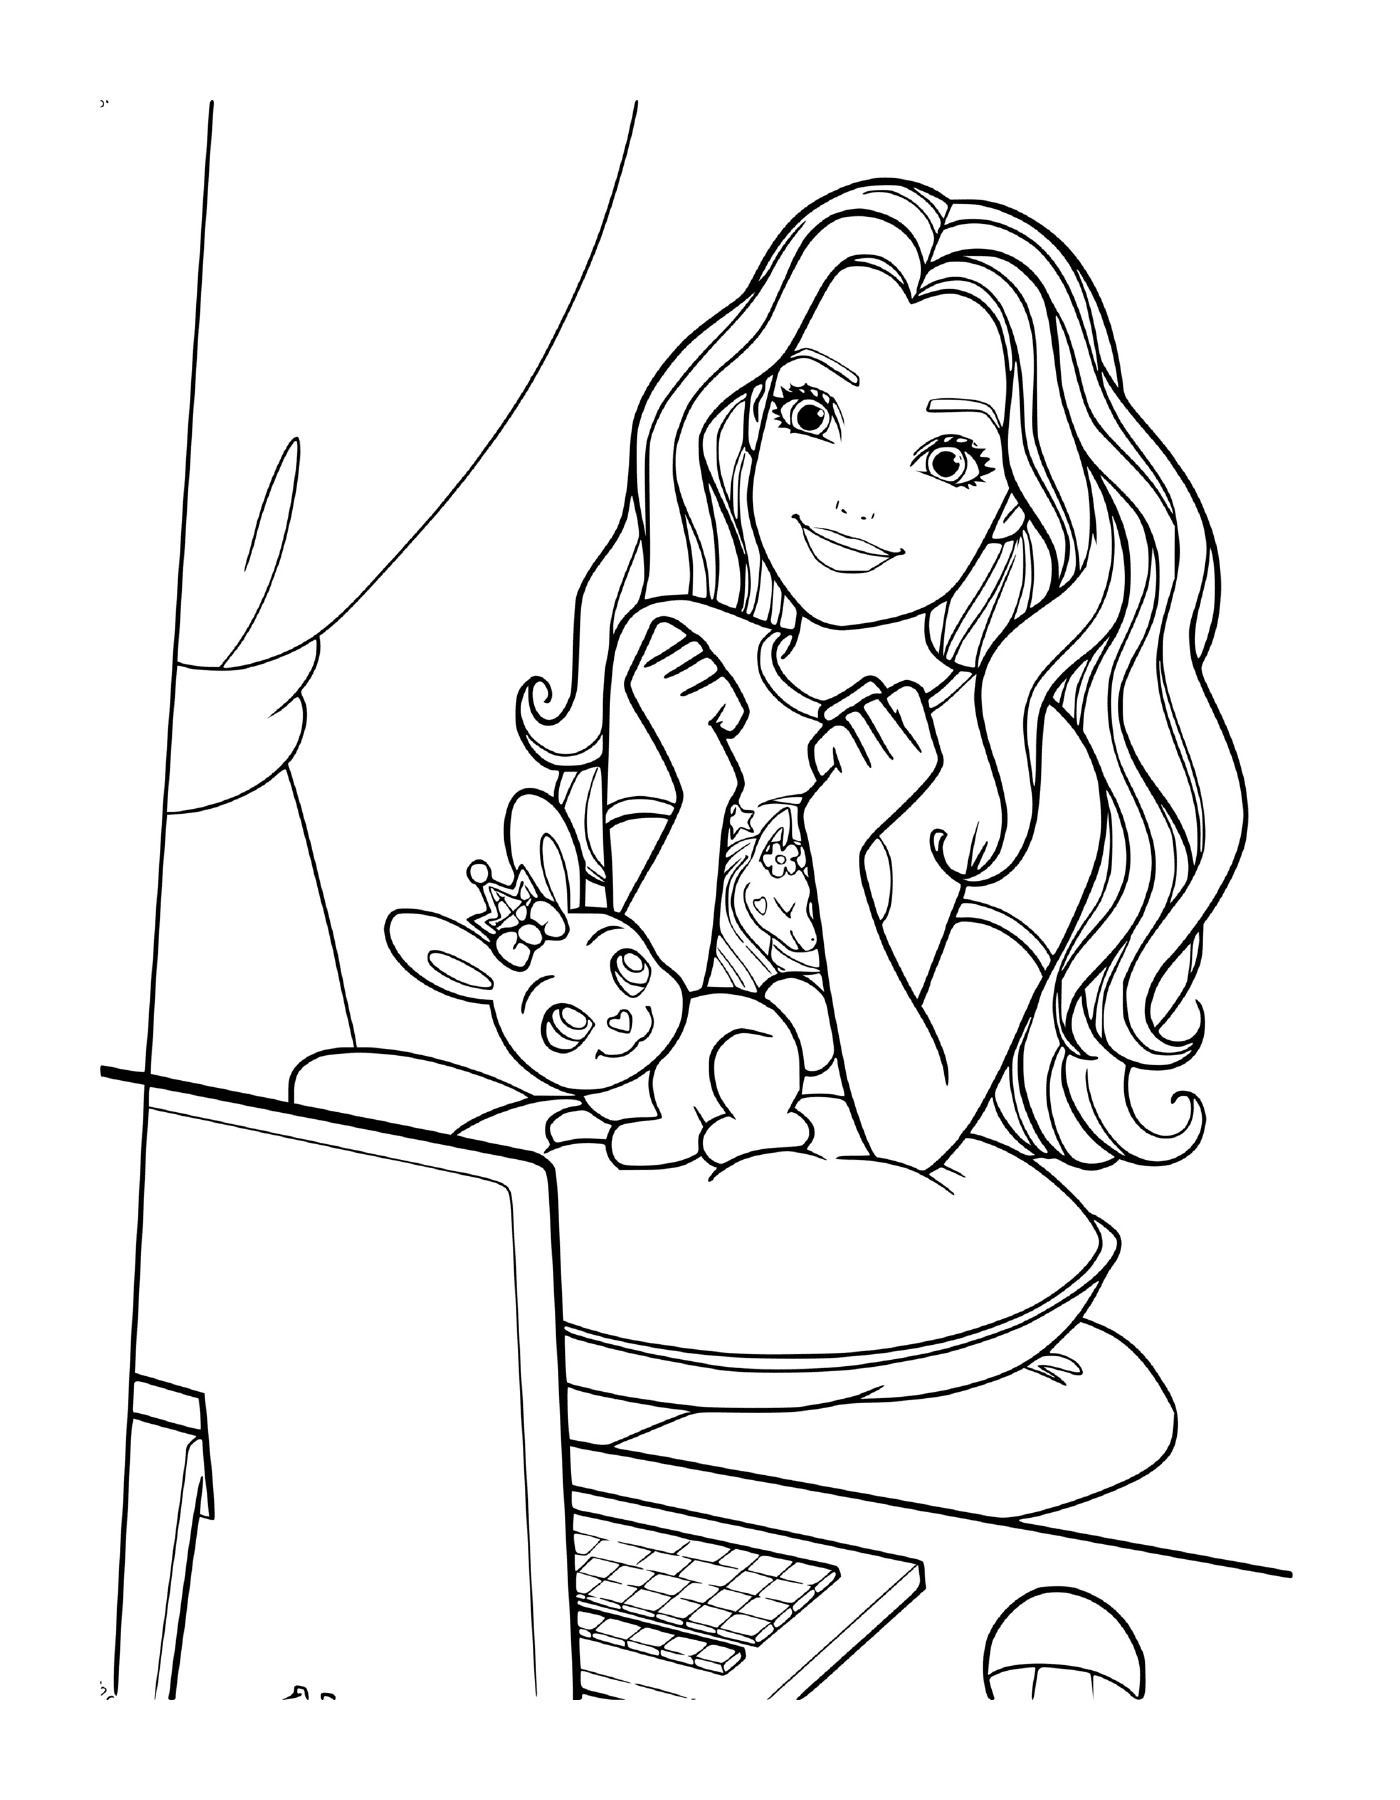  Una joven sentada frente a una computadora 